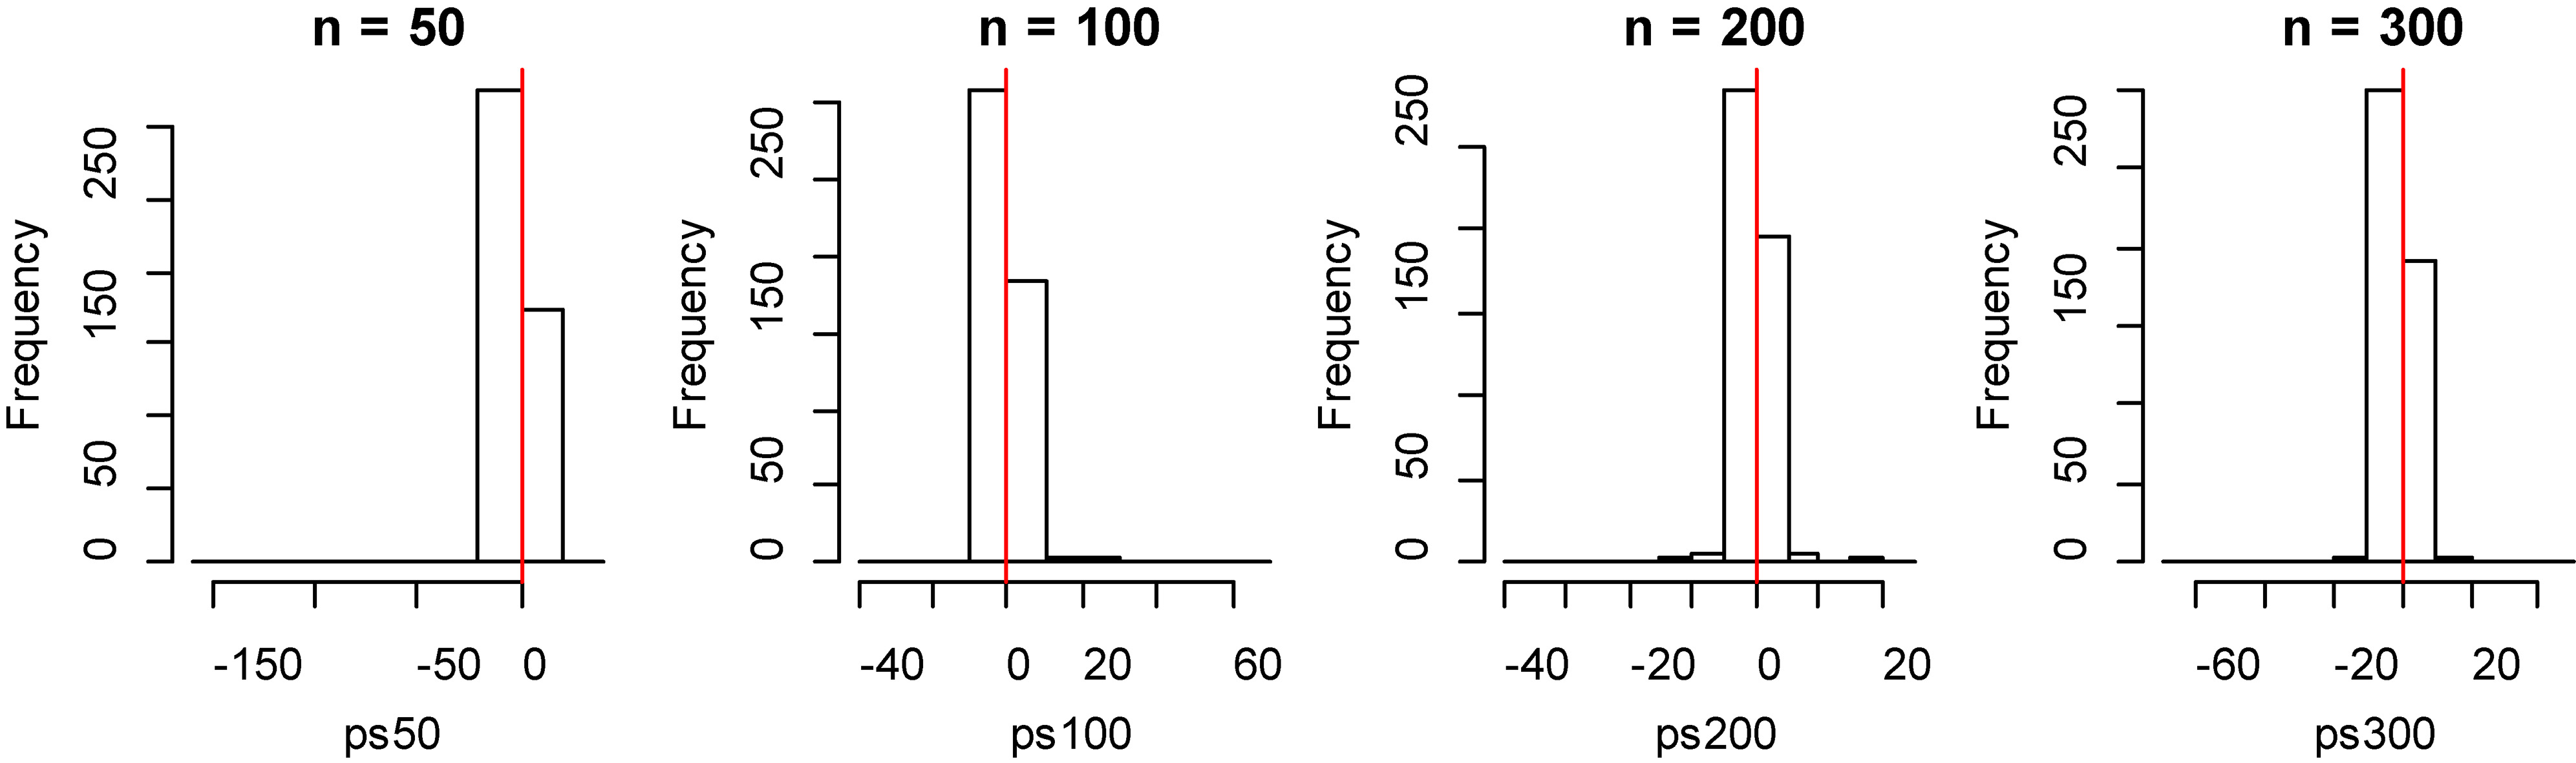 Histogram of bias for fitting data of penalized spline method with model 1.